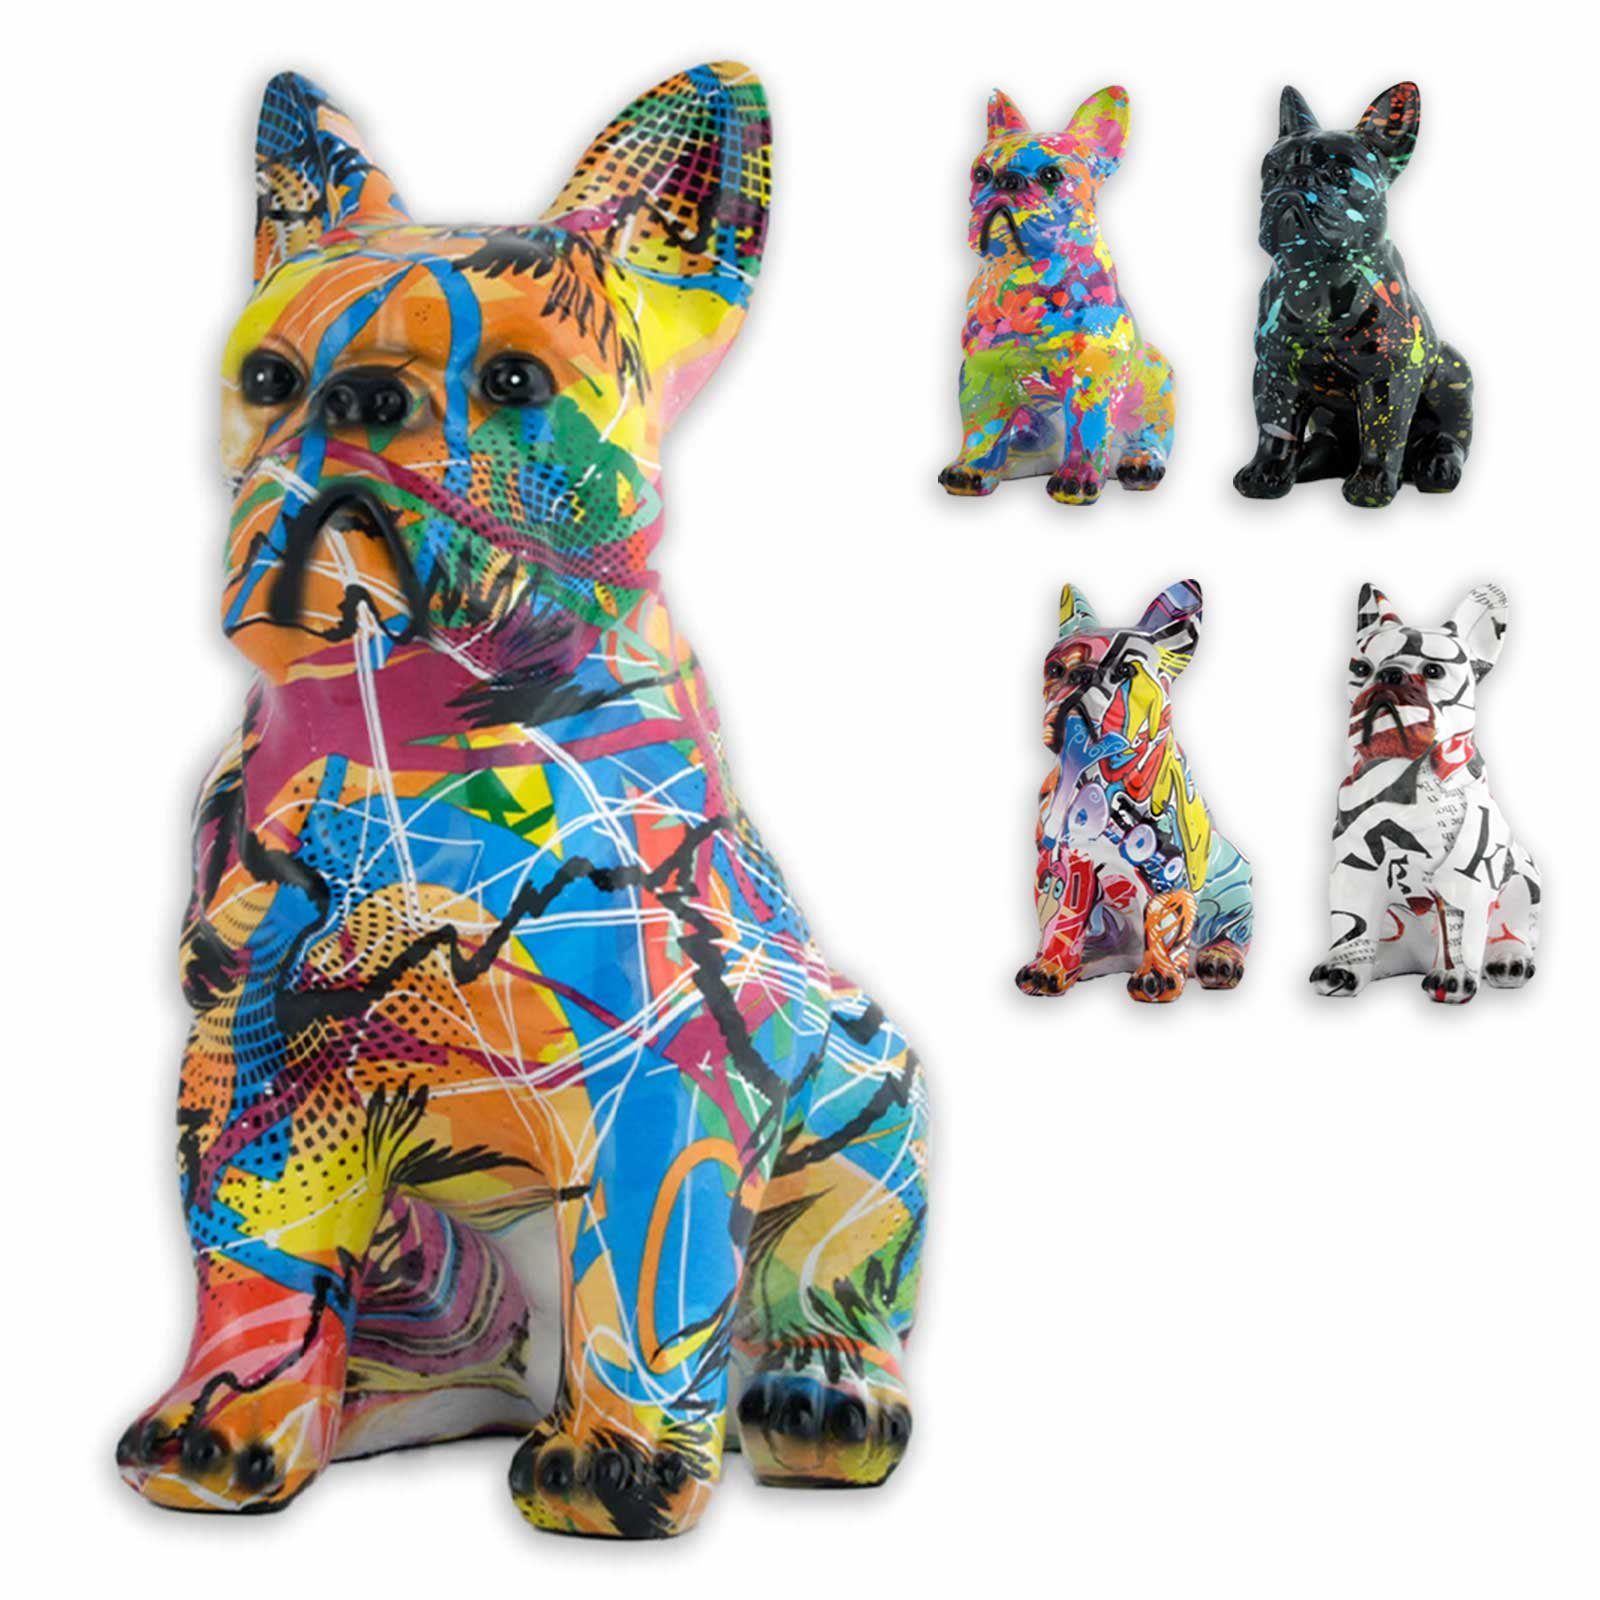 Hikeren Tierfigur Bulldoggen-Ornamente,Schlüsseltablett,Desktop-Dekorationen,30*33  cm